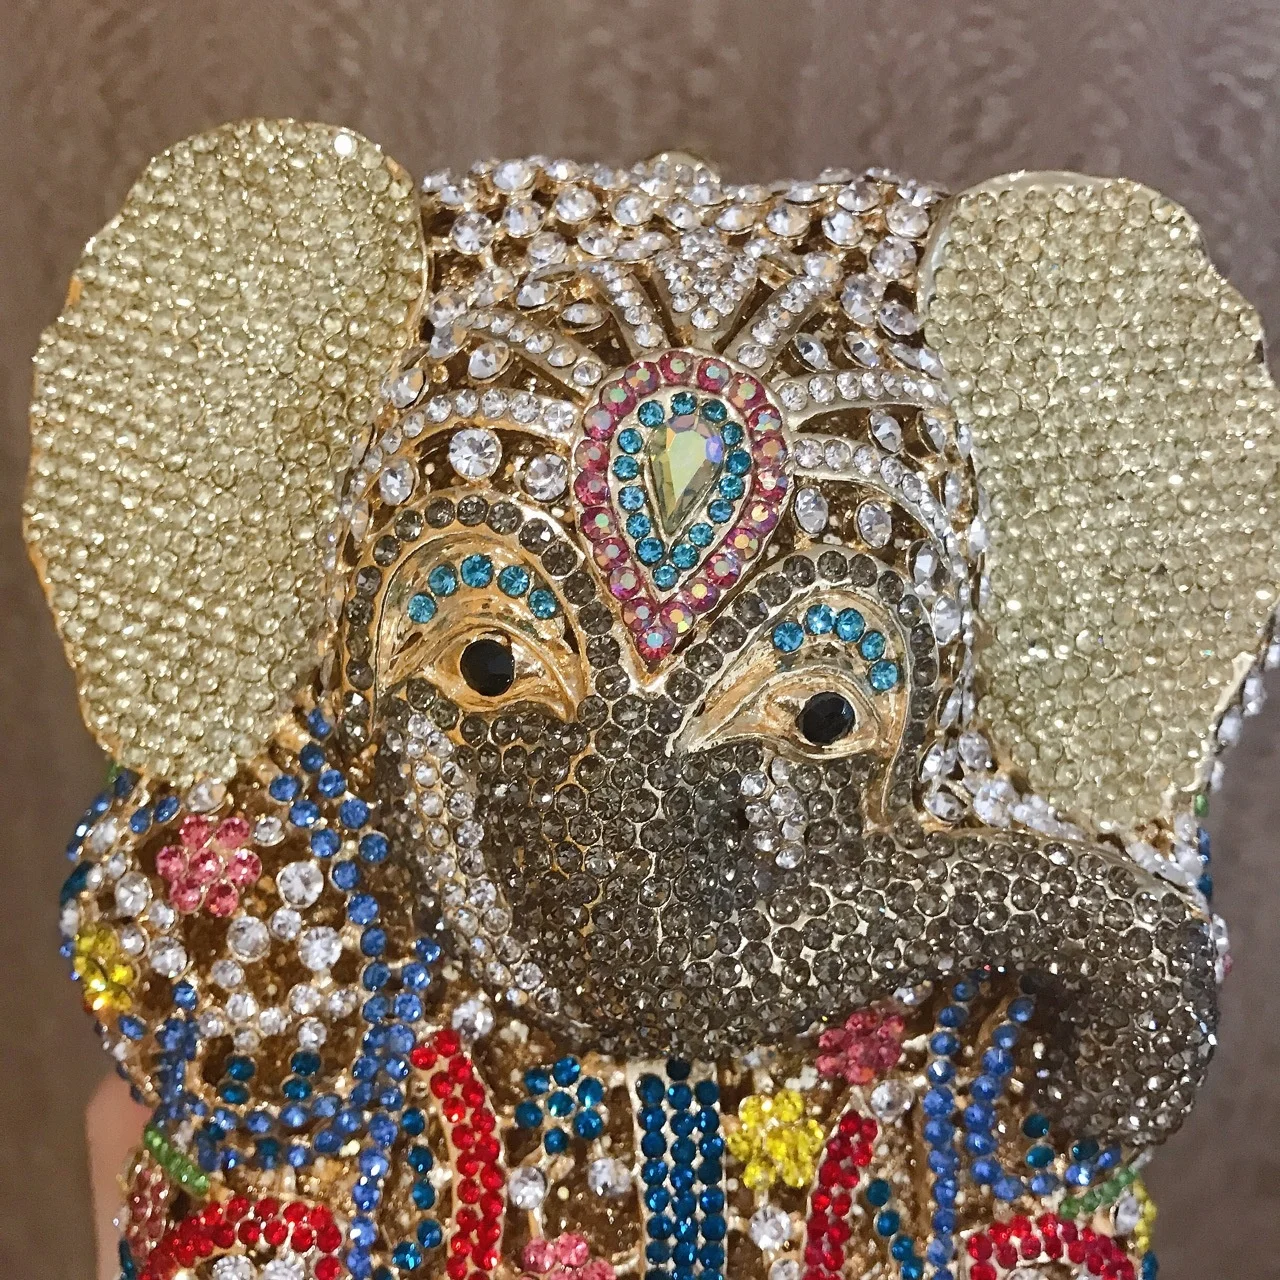 Amiqi MRY157 Elephant-Shaped Rhinestone Purse For Female Diamond Evening Clutch Bag Luxury Lady Phone Shoulder Party